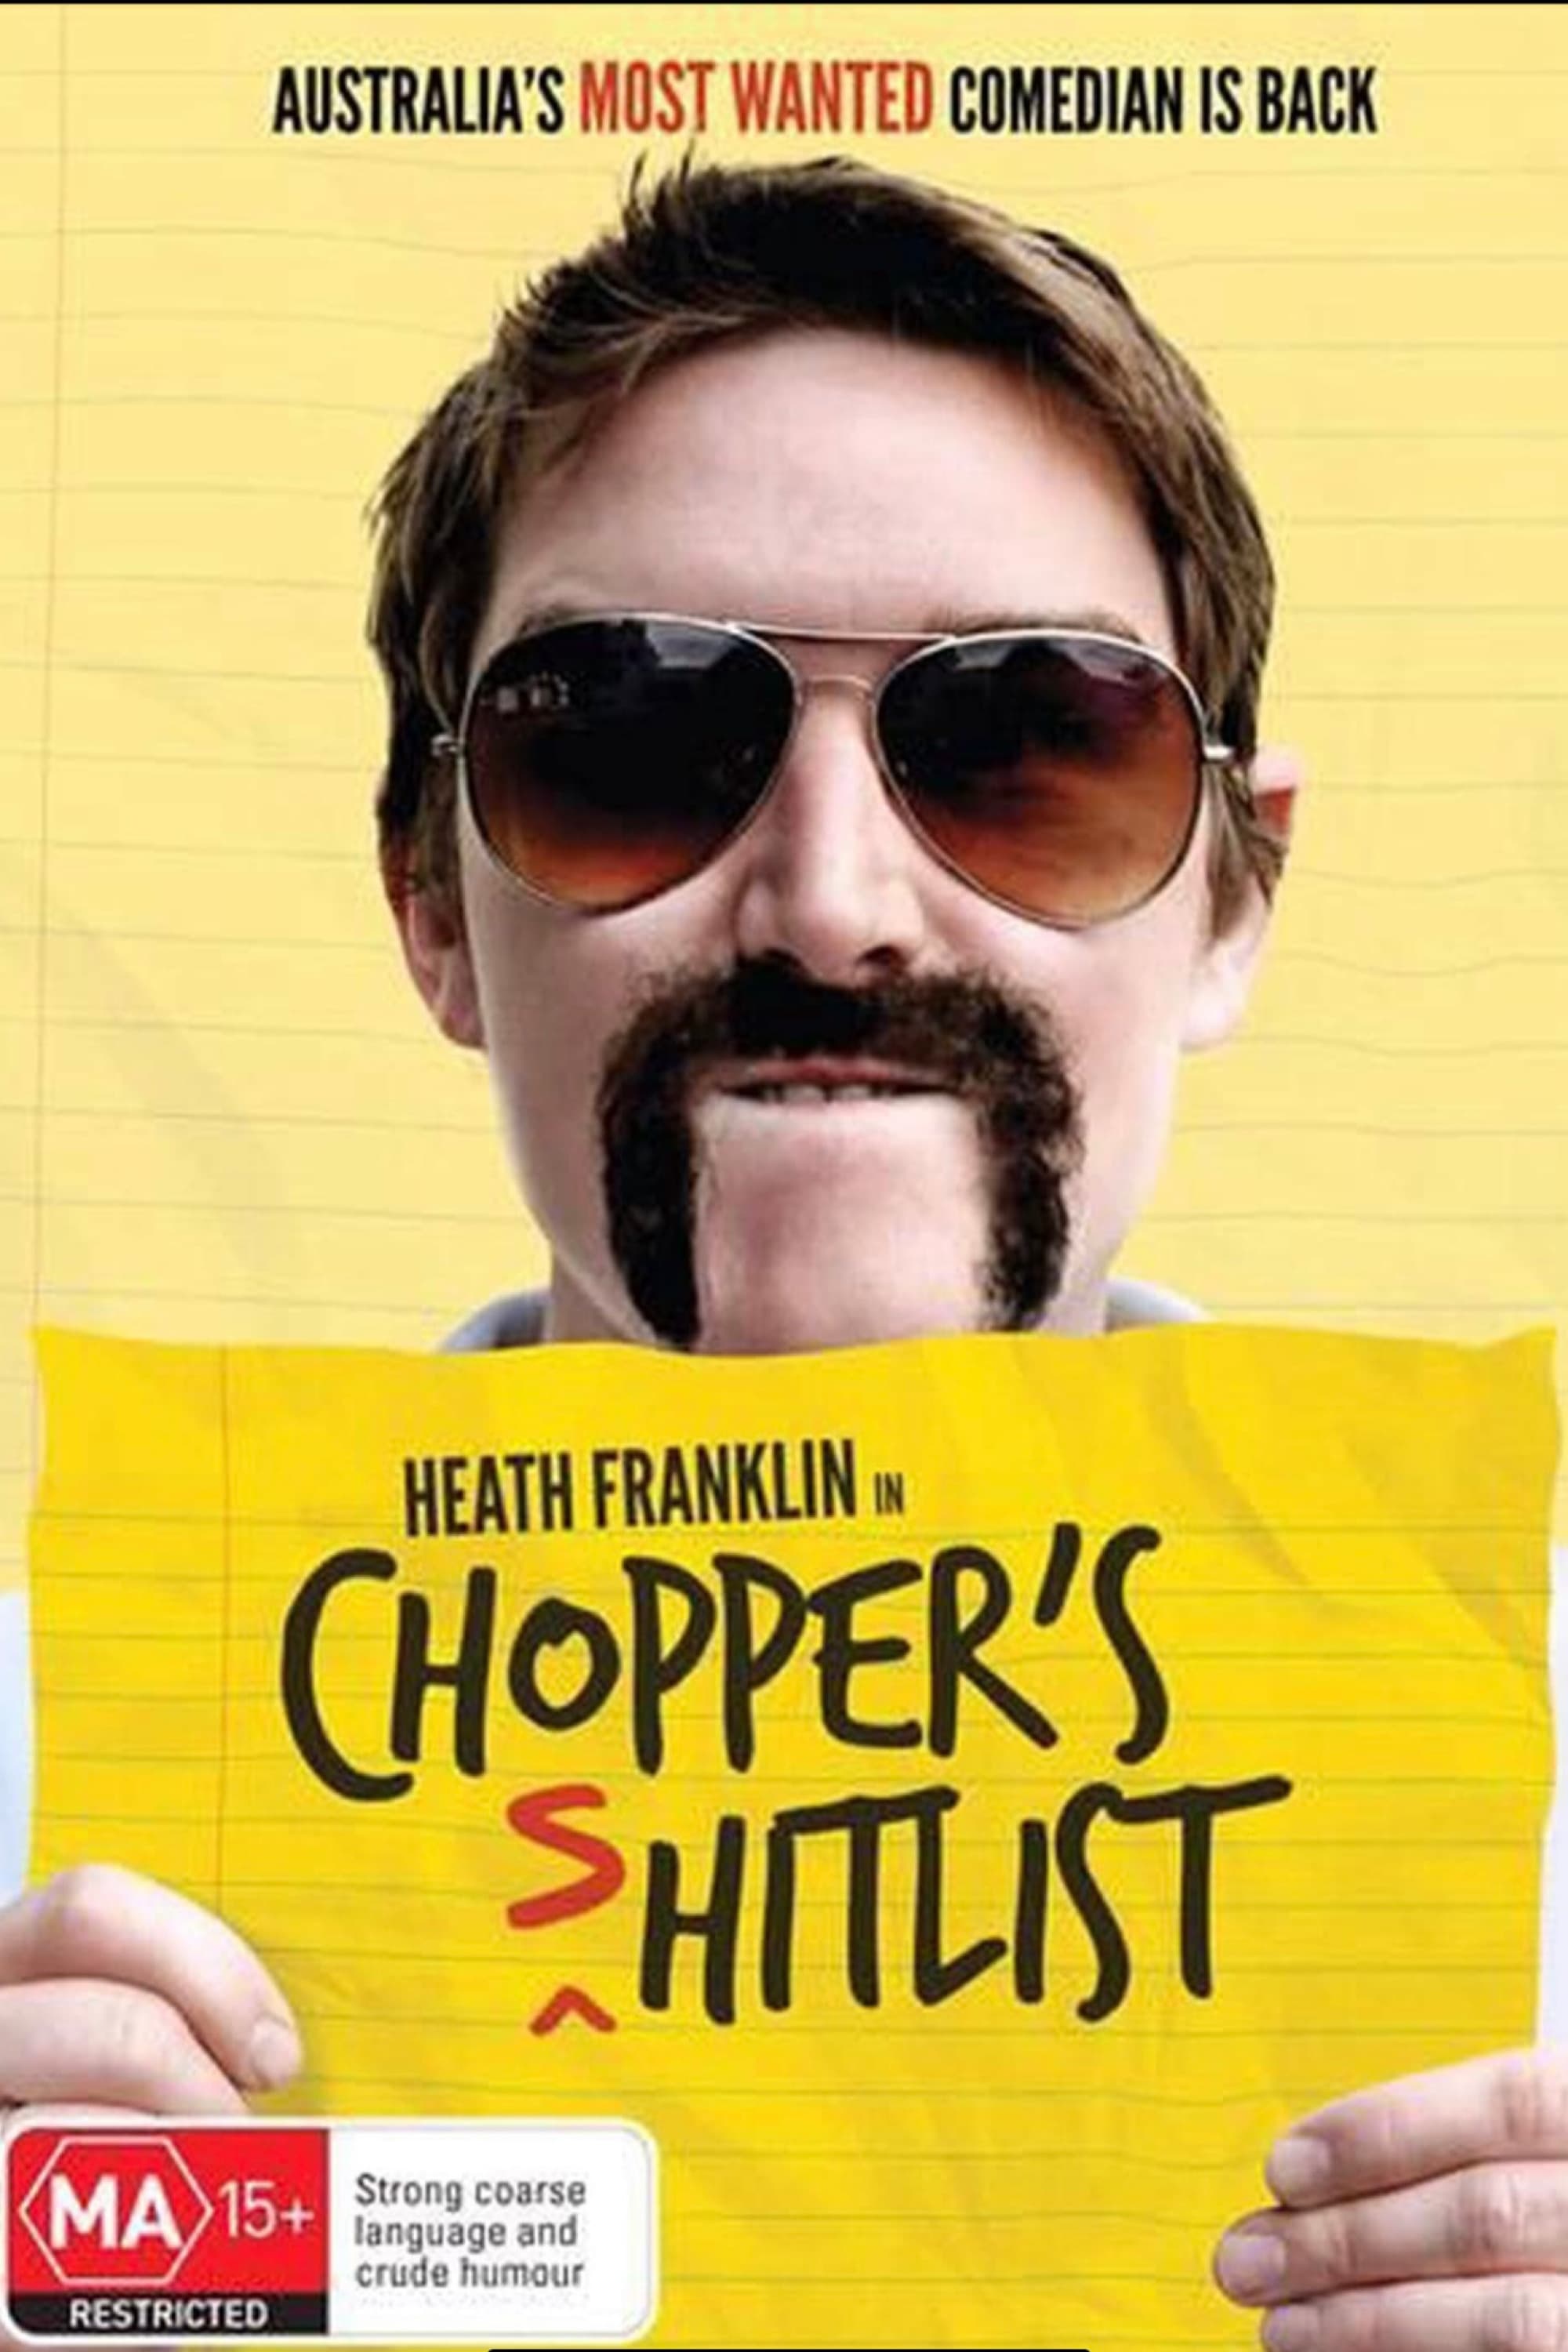 Heath Franklin's Chopper - The (s)Hitlist